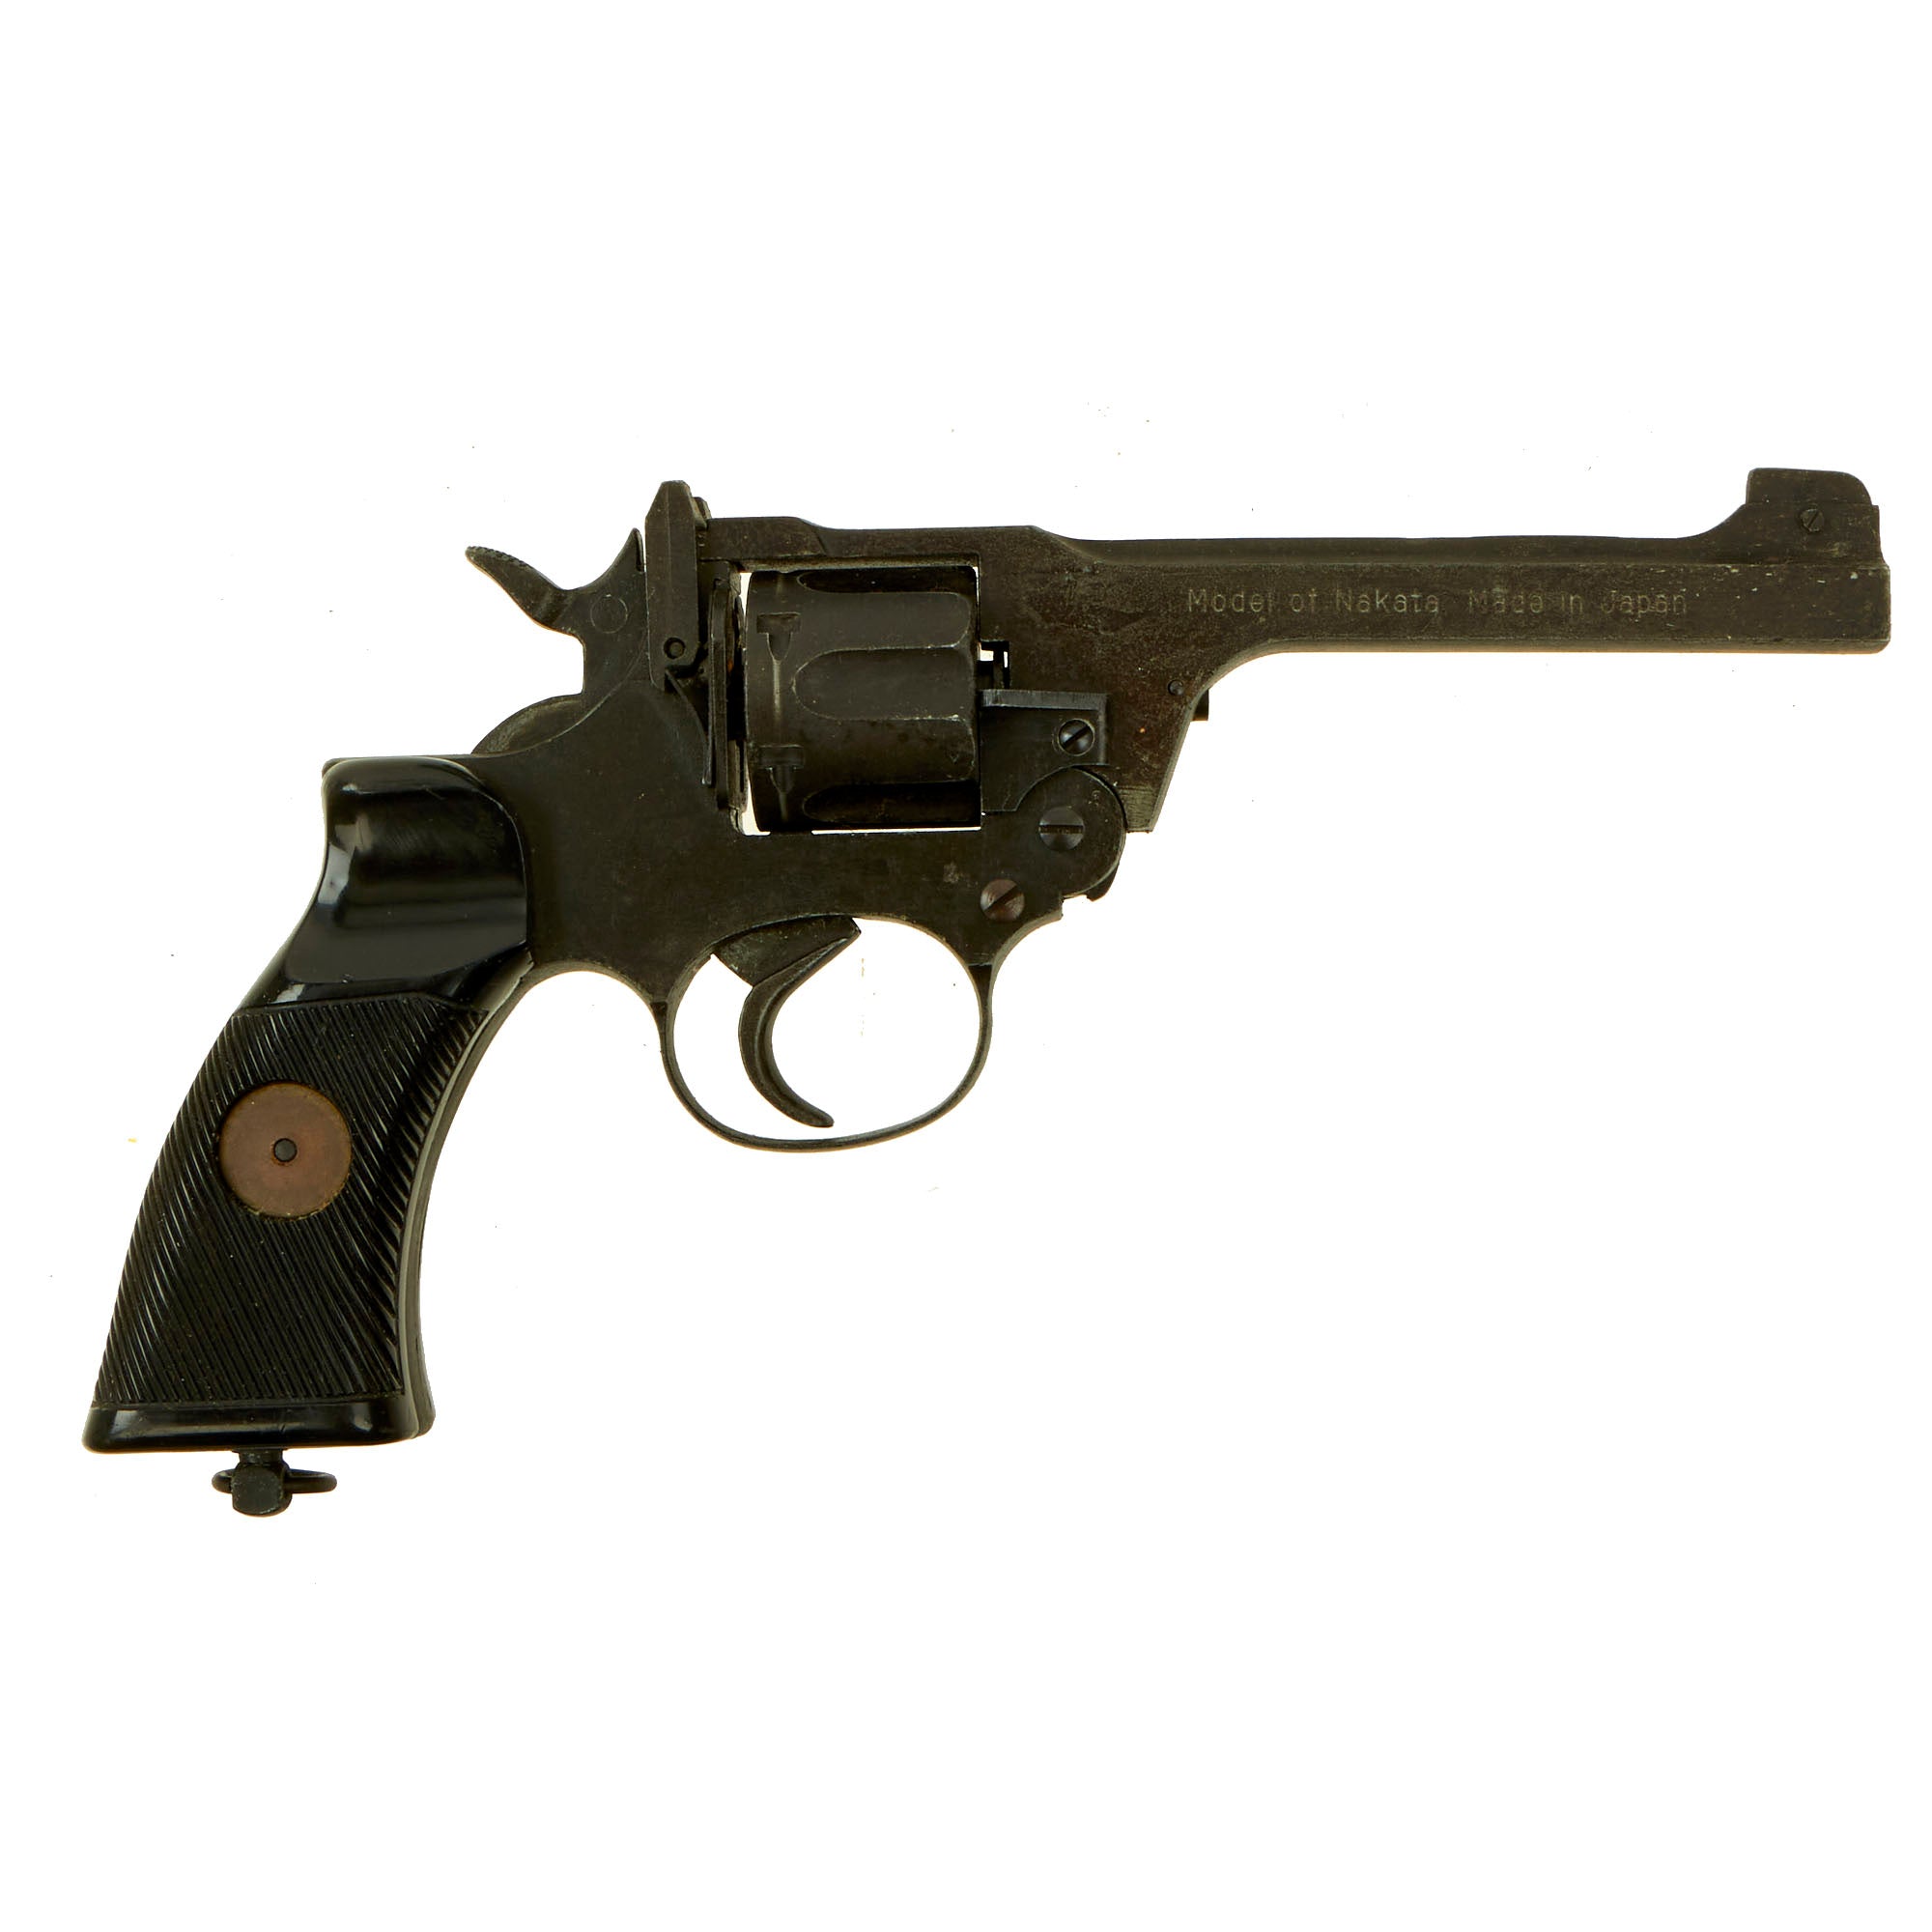 British WWII Replica Enfield No 2 Mk I Revolver Cap Plug-Firing Pistol –  International Military Antiques